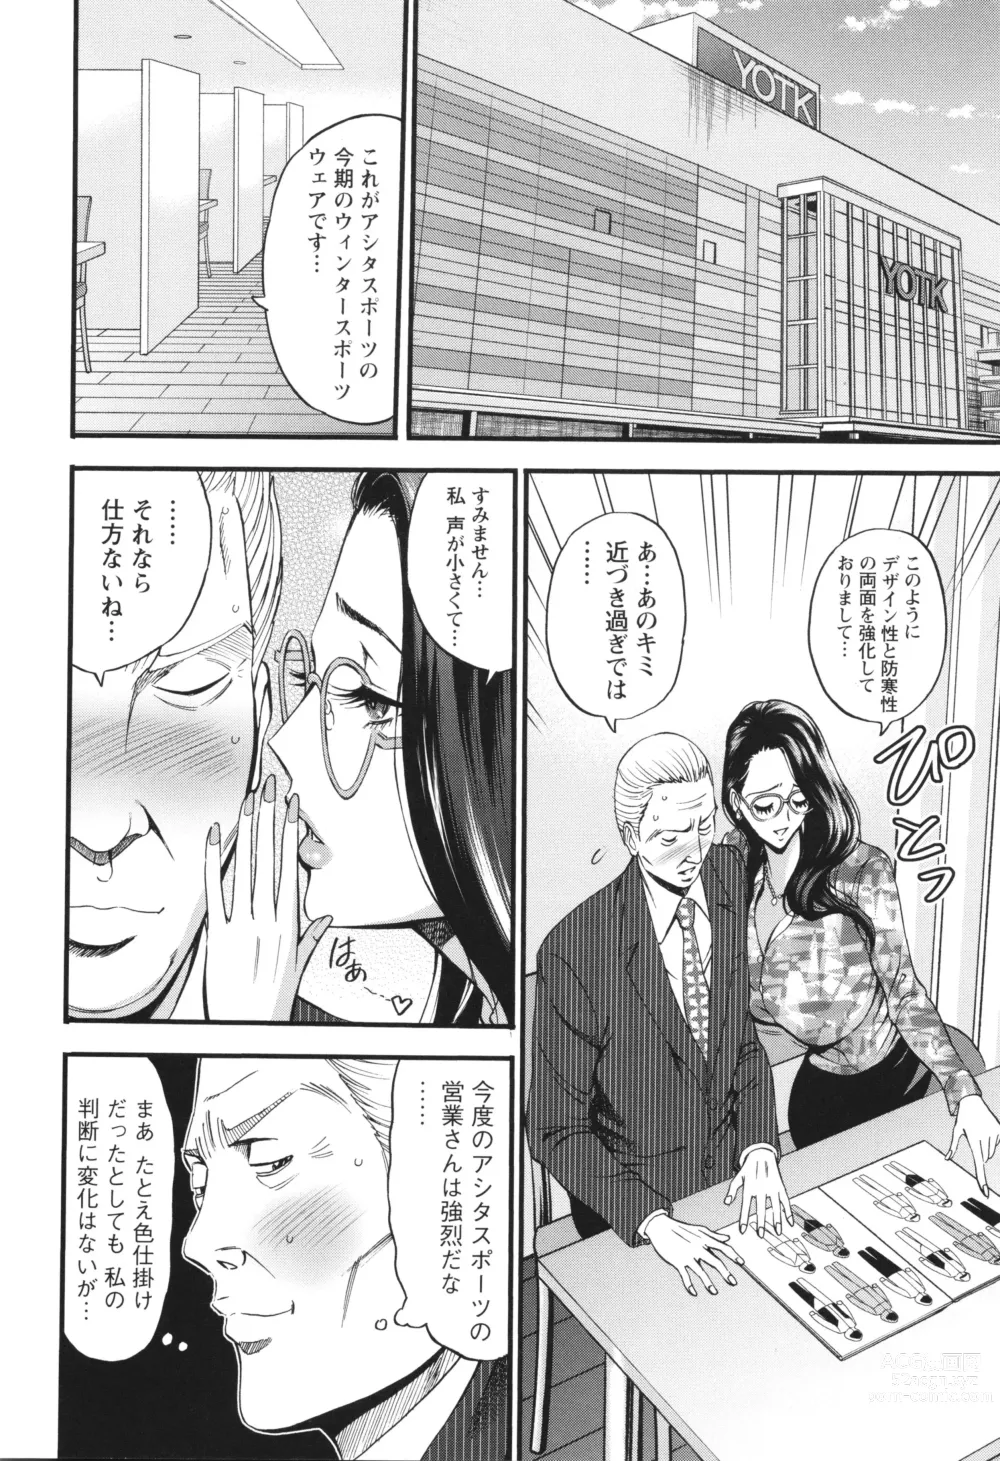 Page 36 of manga Compla Yuruyuru Chimari-san  - Chimaris compliance awareness is very lax.